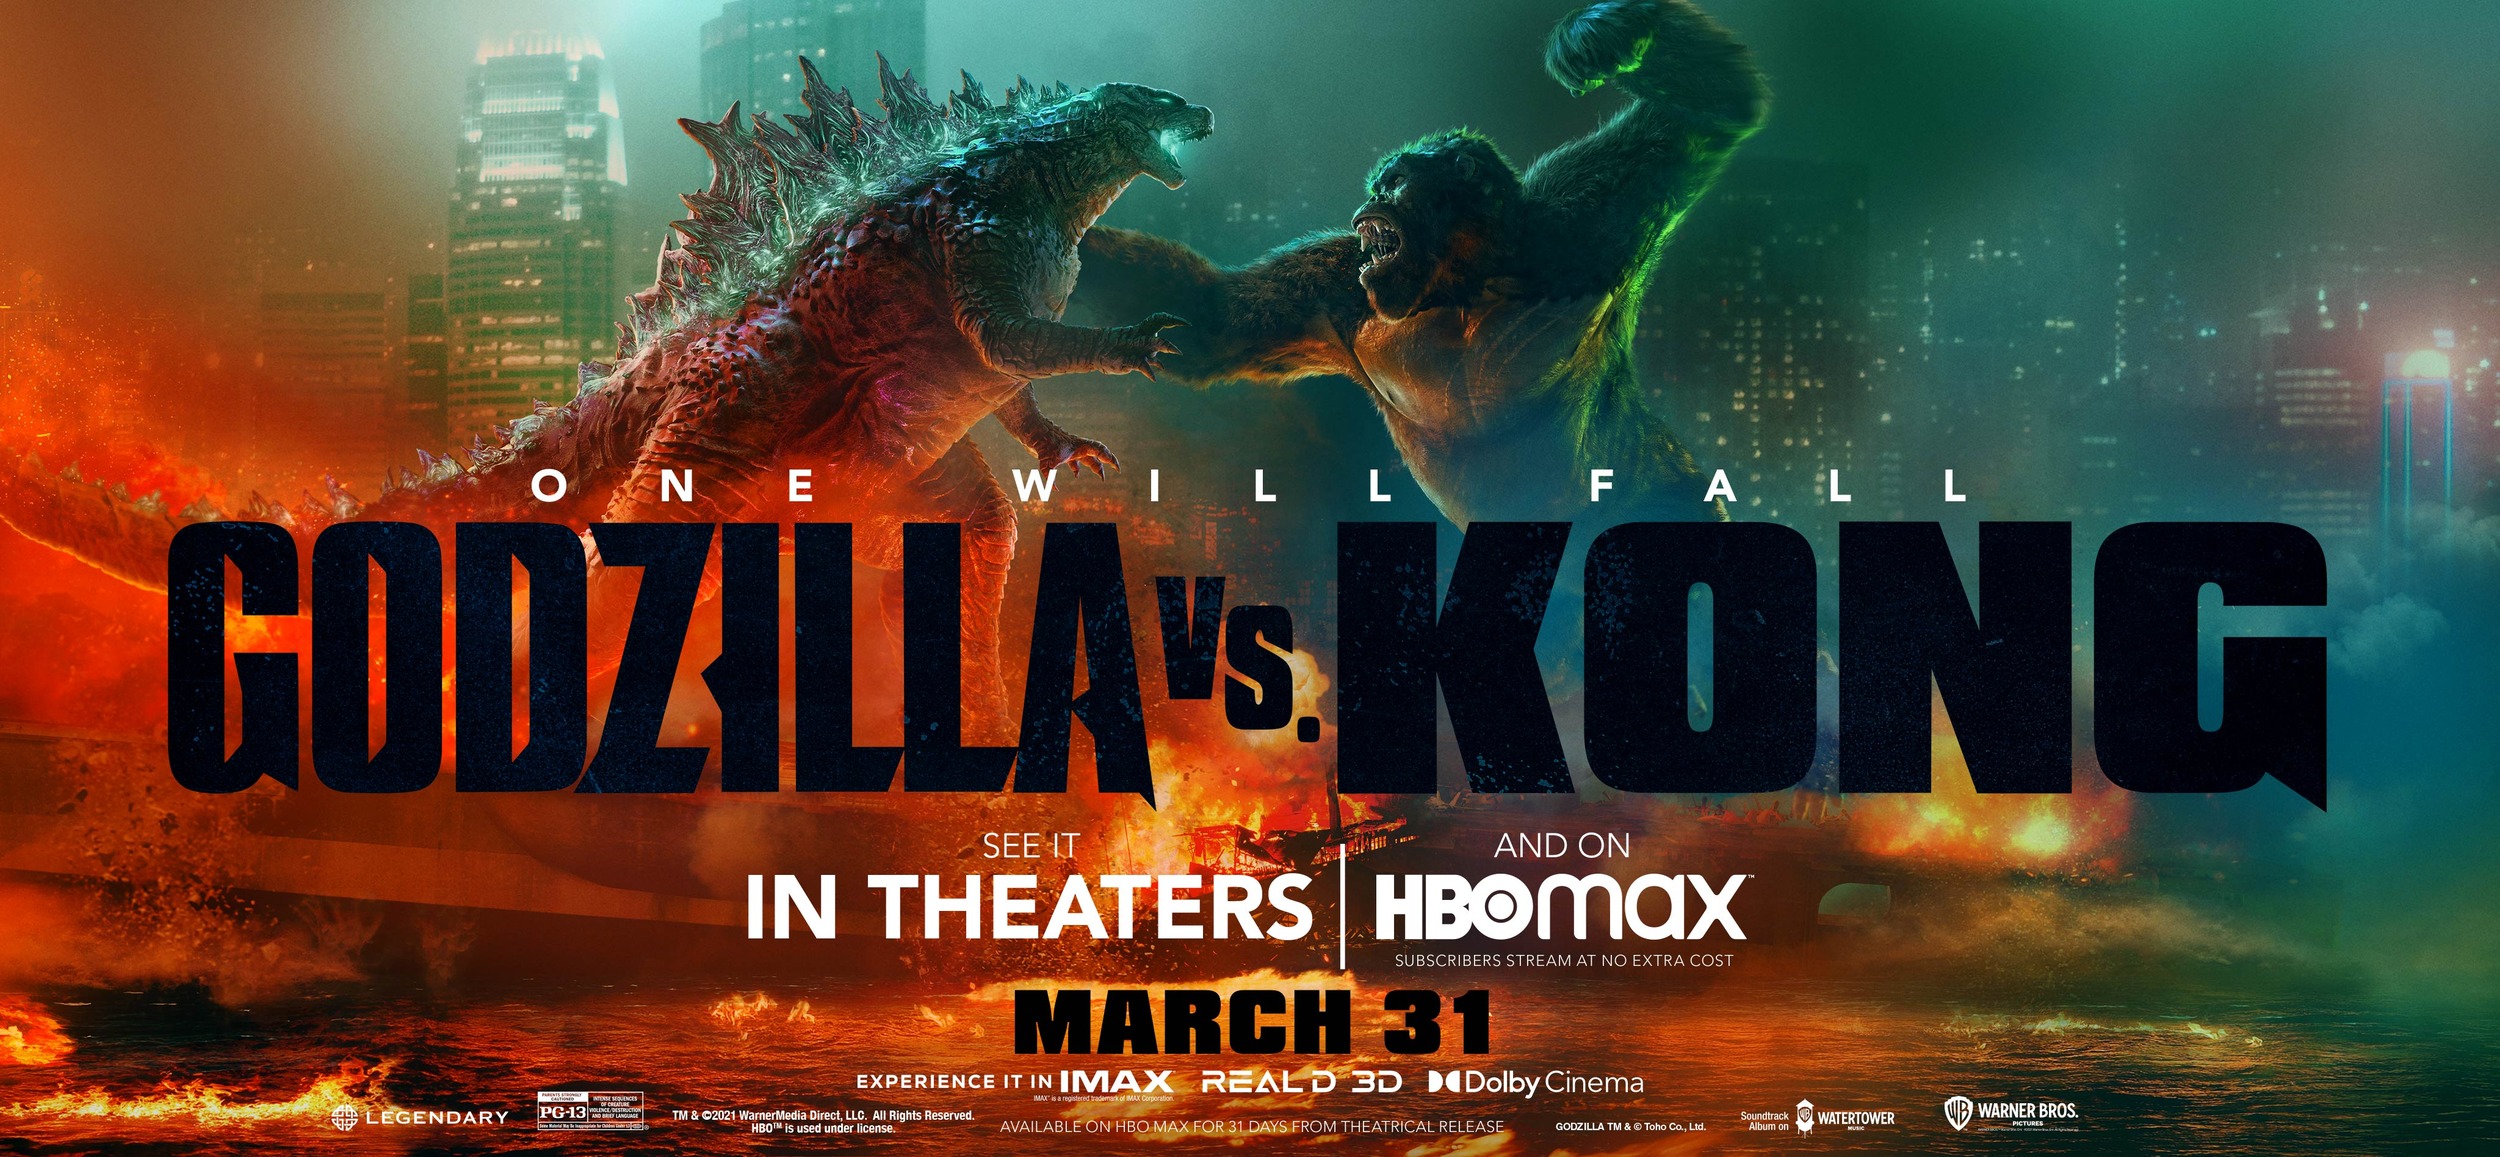 Mega Sized Movie Poster Image for Godzilla vs. Kong (#19 of 20)